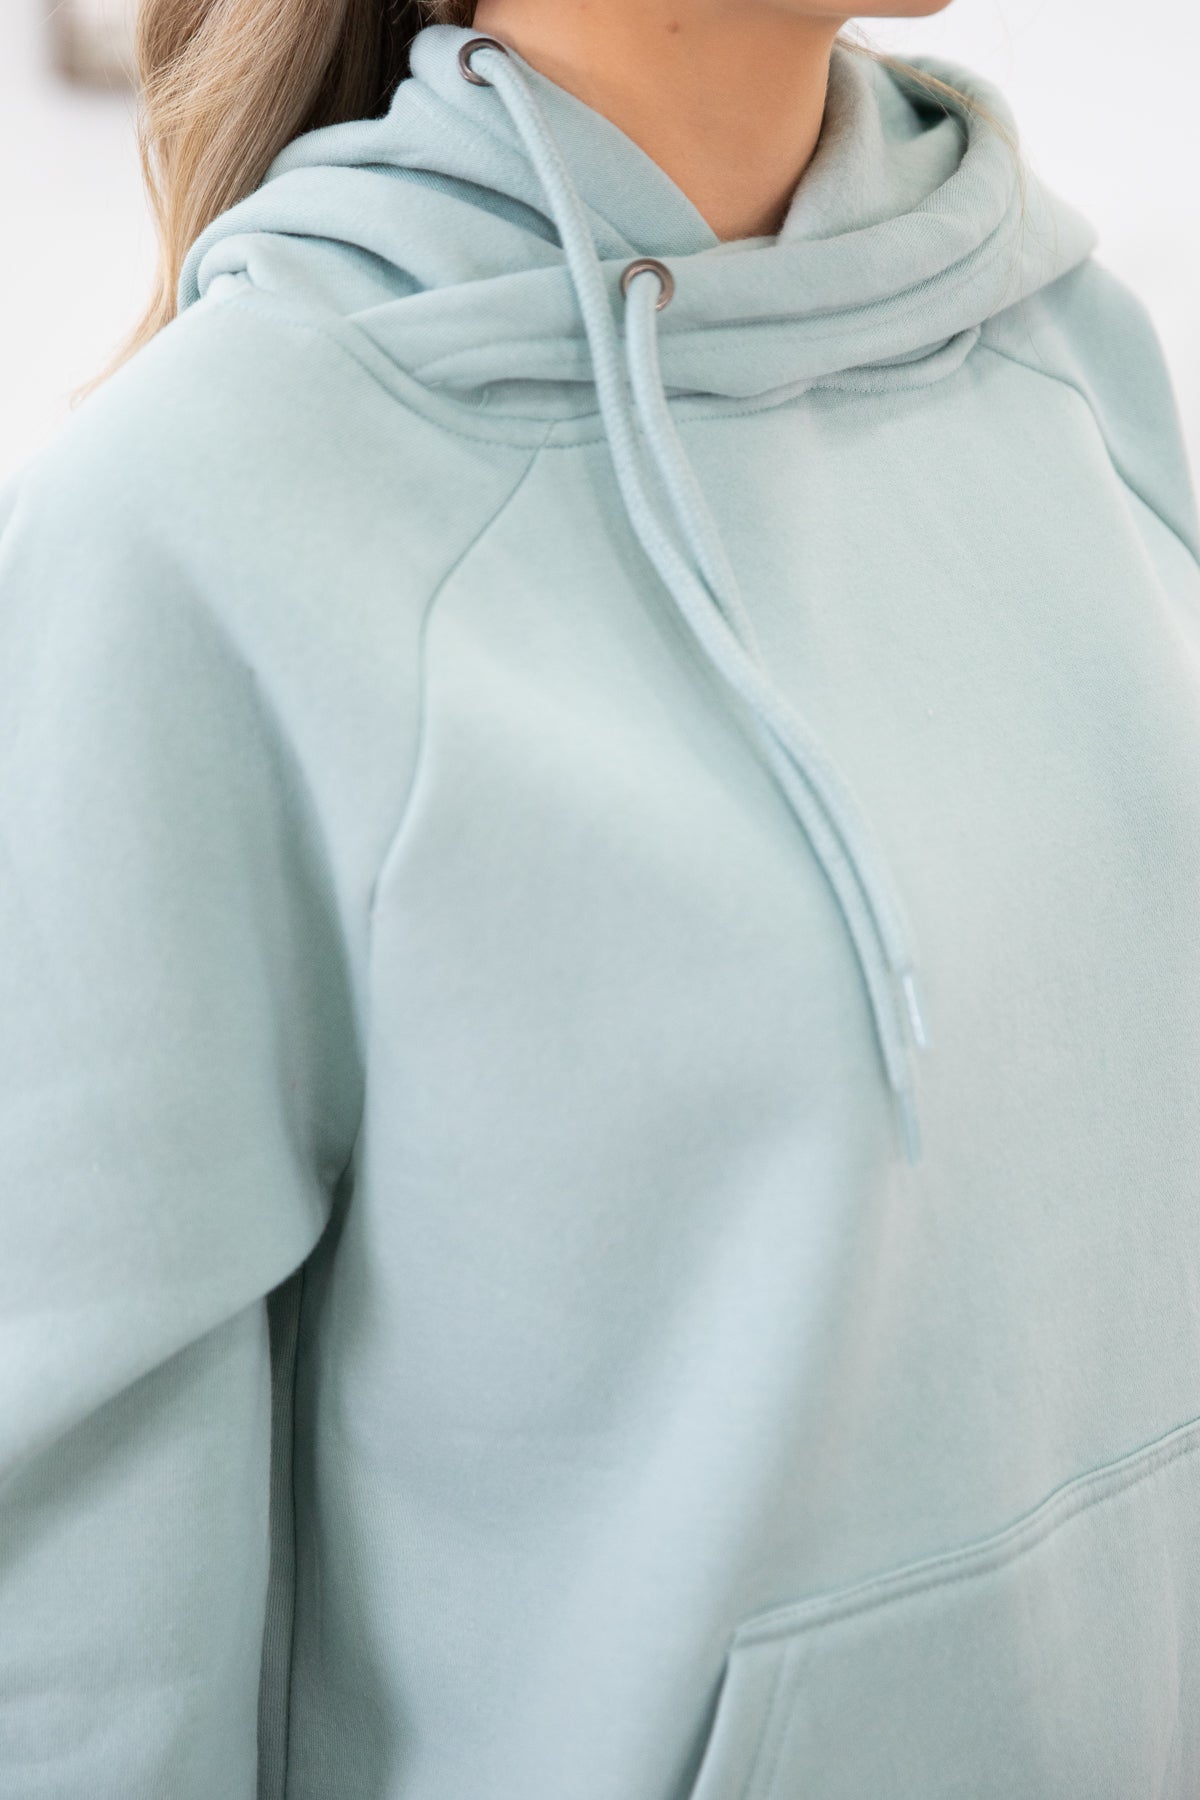 Aqua Cowl Neck Sweatshirt with Kangaroo Pocket - Filly Flair